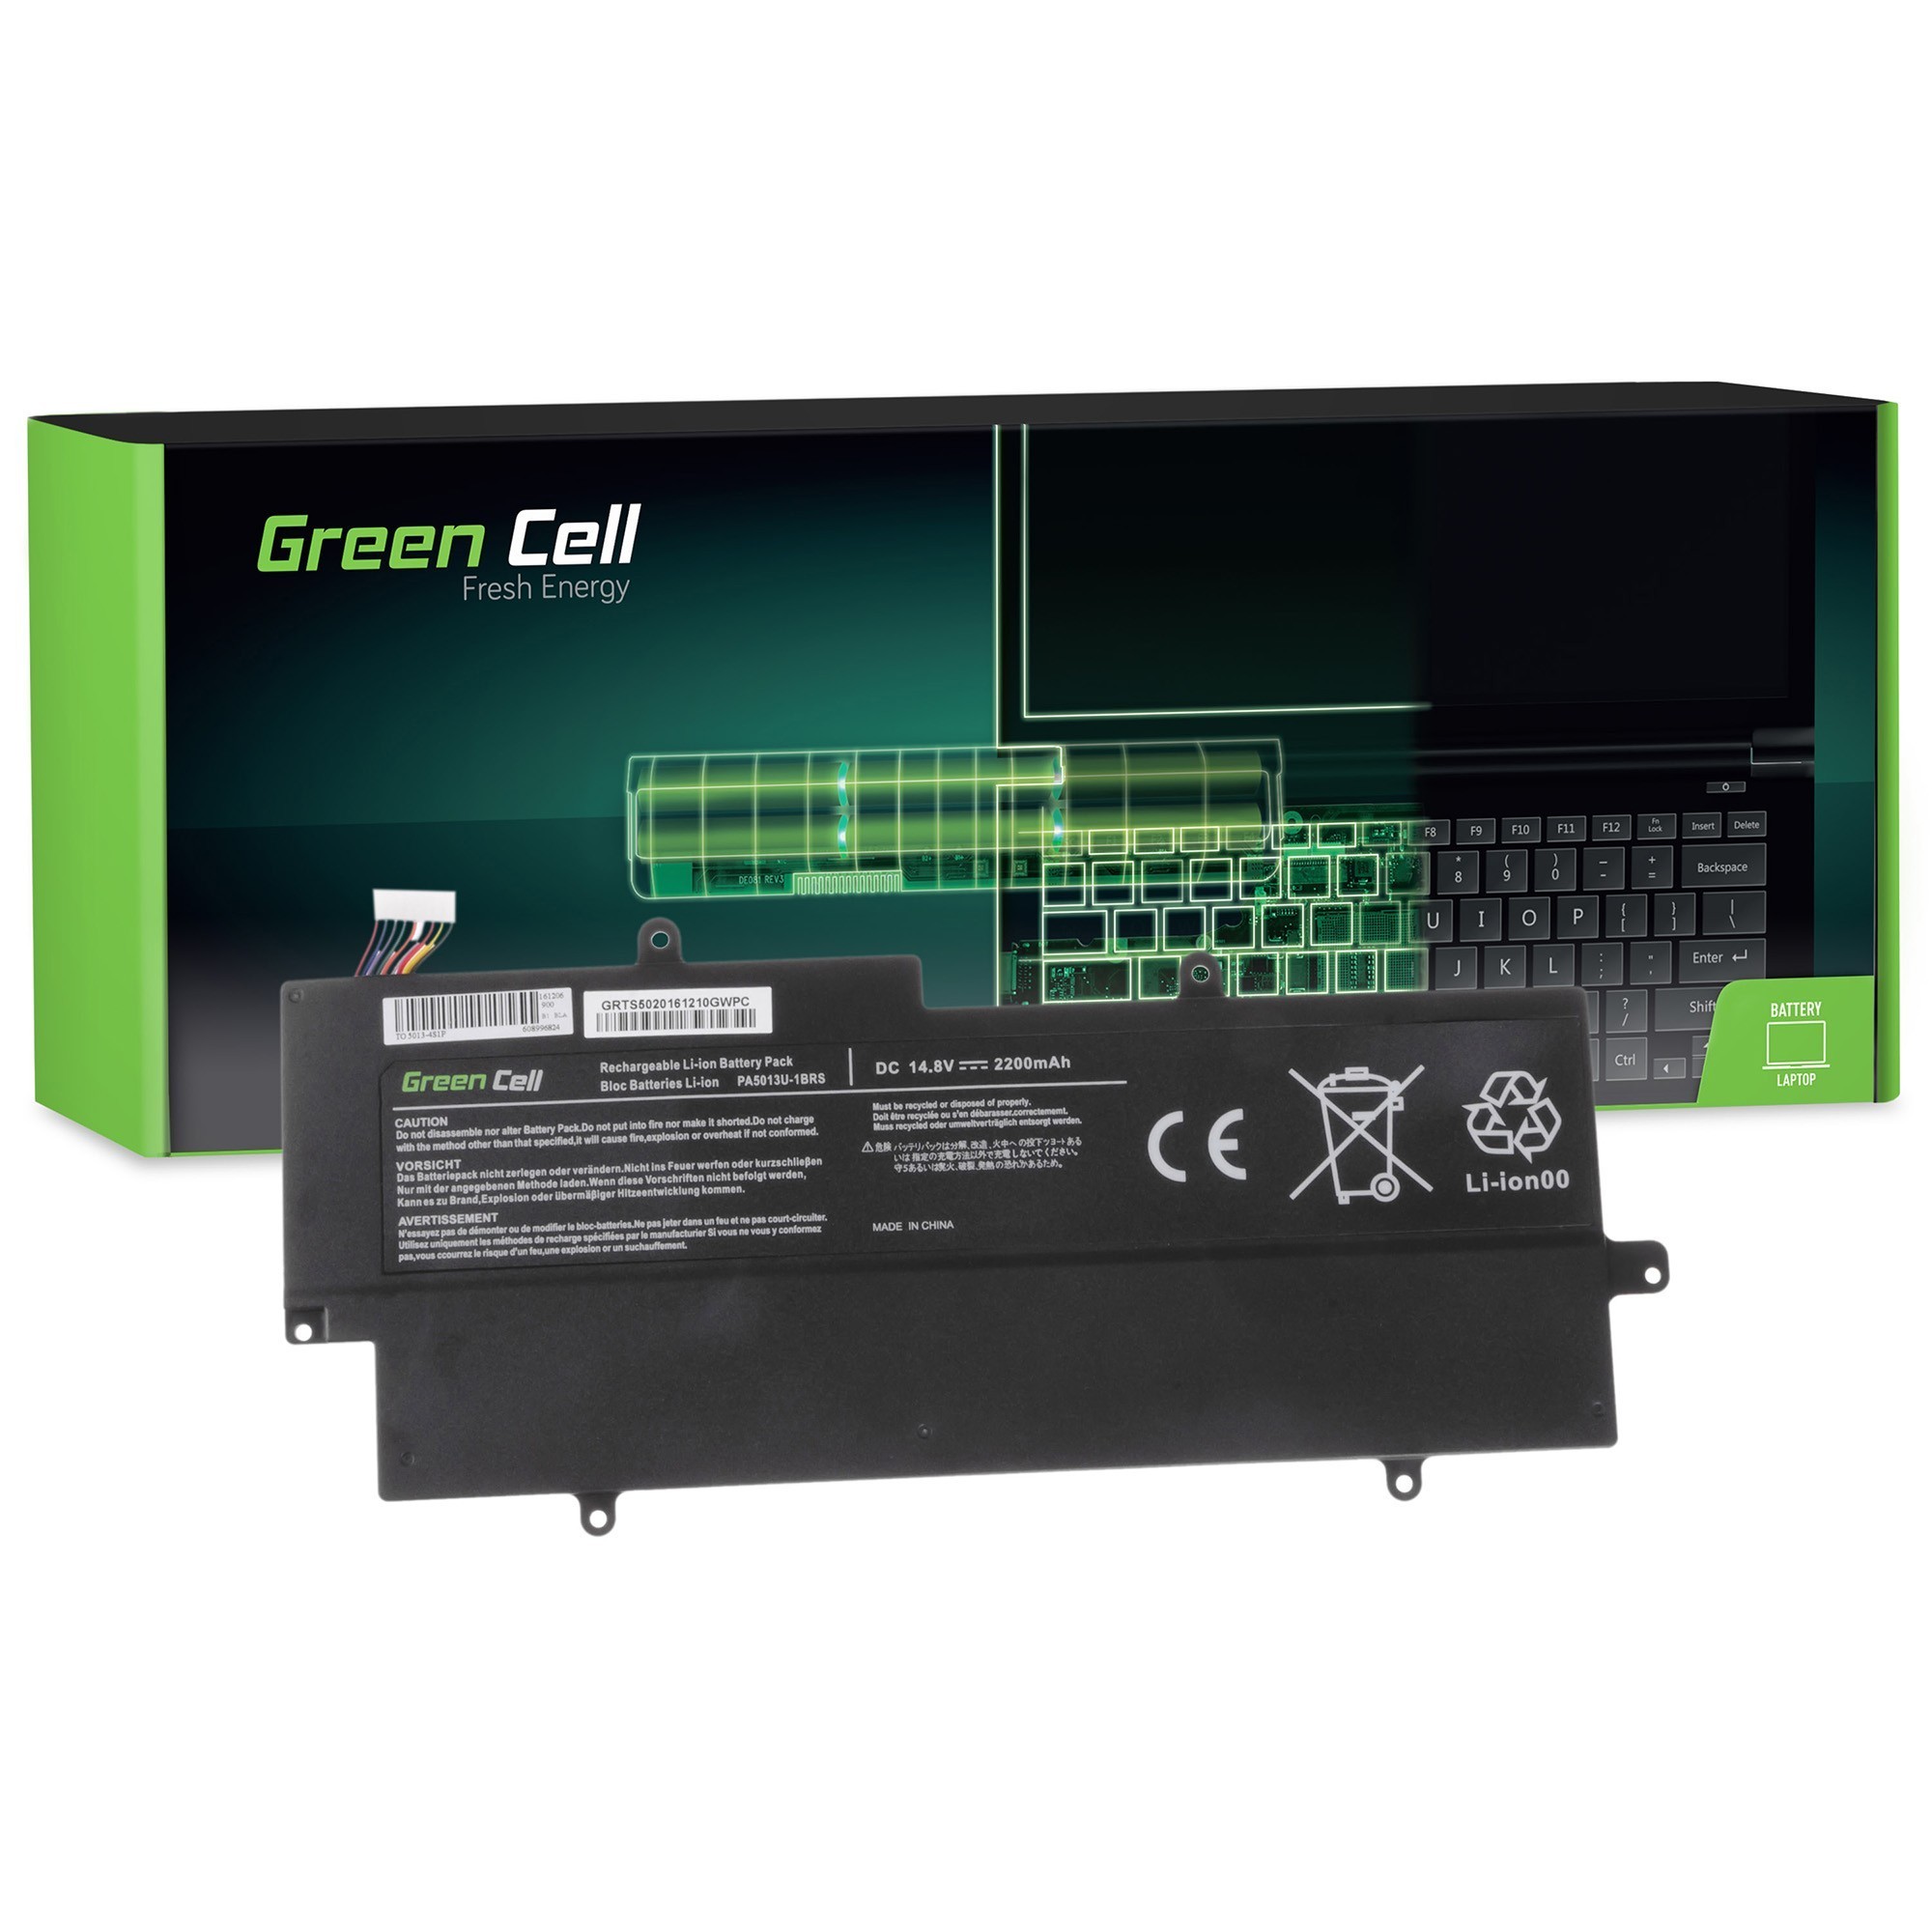 Green Cell Battery for Toshiba Portege Z830 Z835 Z930 Z935 / 14,4V 2200mAh